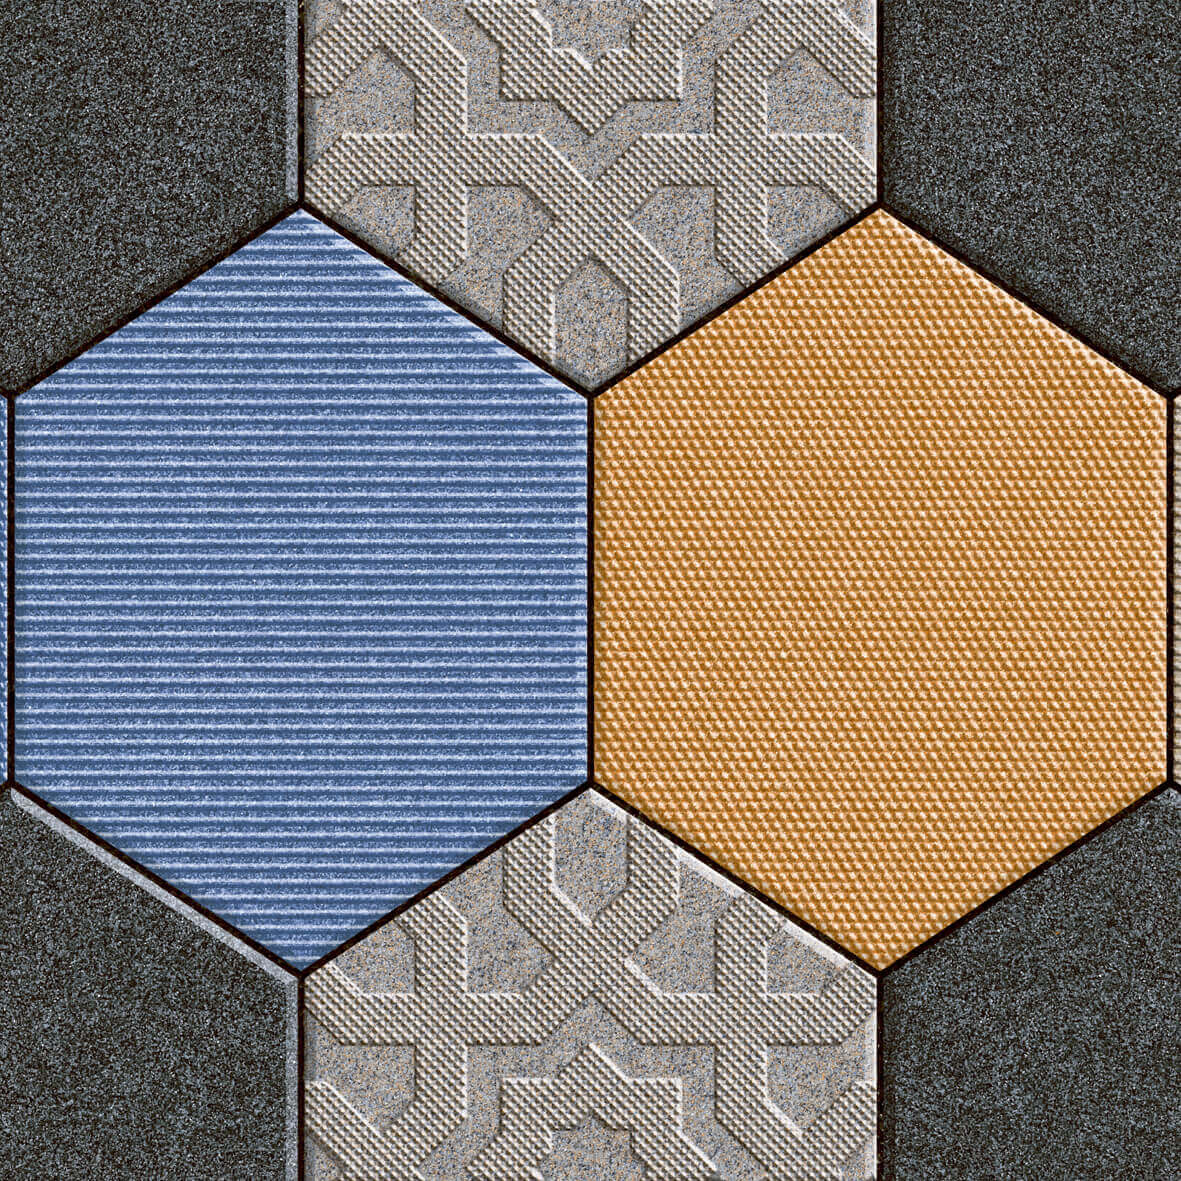 Hexagonal Tiles for Swimming Pool Tiles, Parking Tiles, Pathway Tiles, Hospital Tiles, Automotive Tiles, High Traffic Tiles, Bar/Restaurant, Commercial/Office, Outdoor Area, Outdoor/Terrace, Porch/Parking